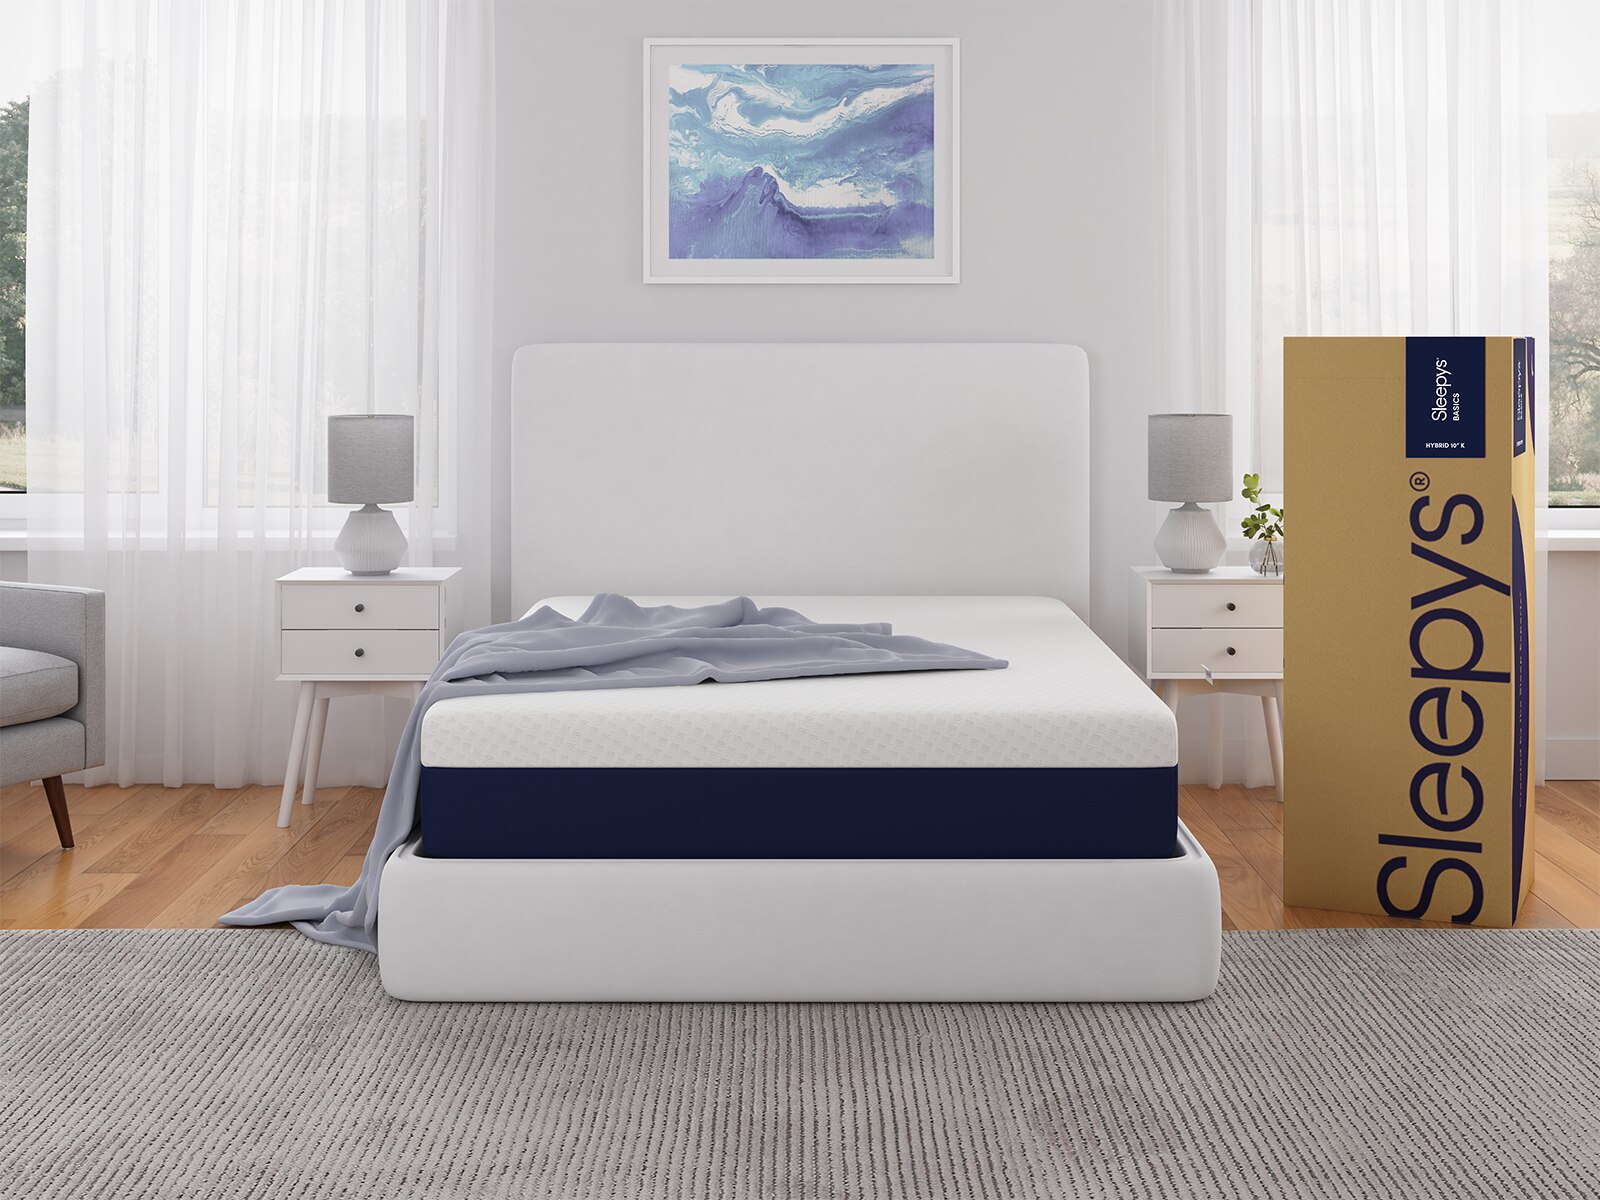 sleepy's hybrid 13 inch medium mattress